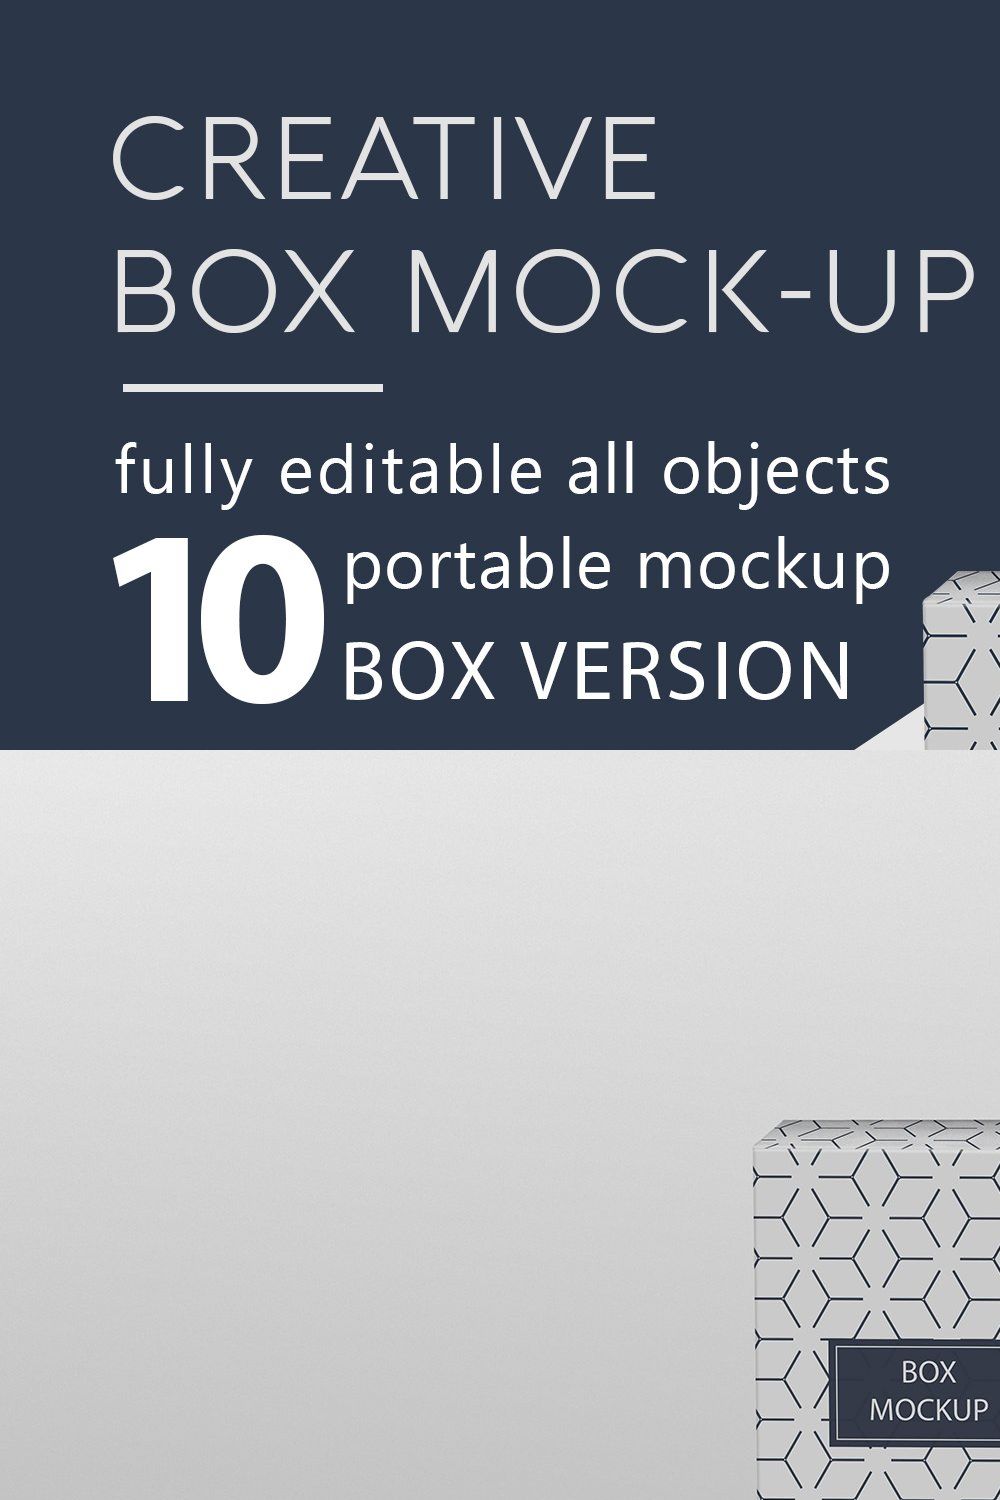 Box Mockup pinterest preview image.